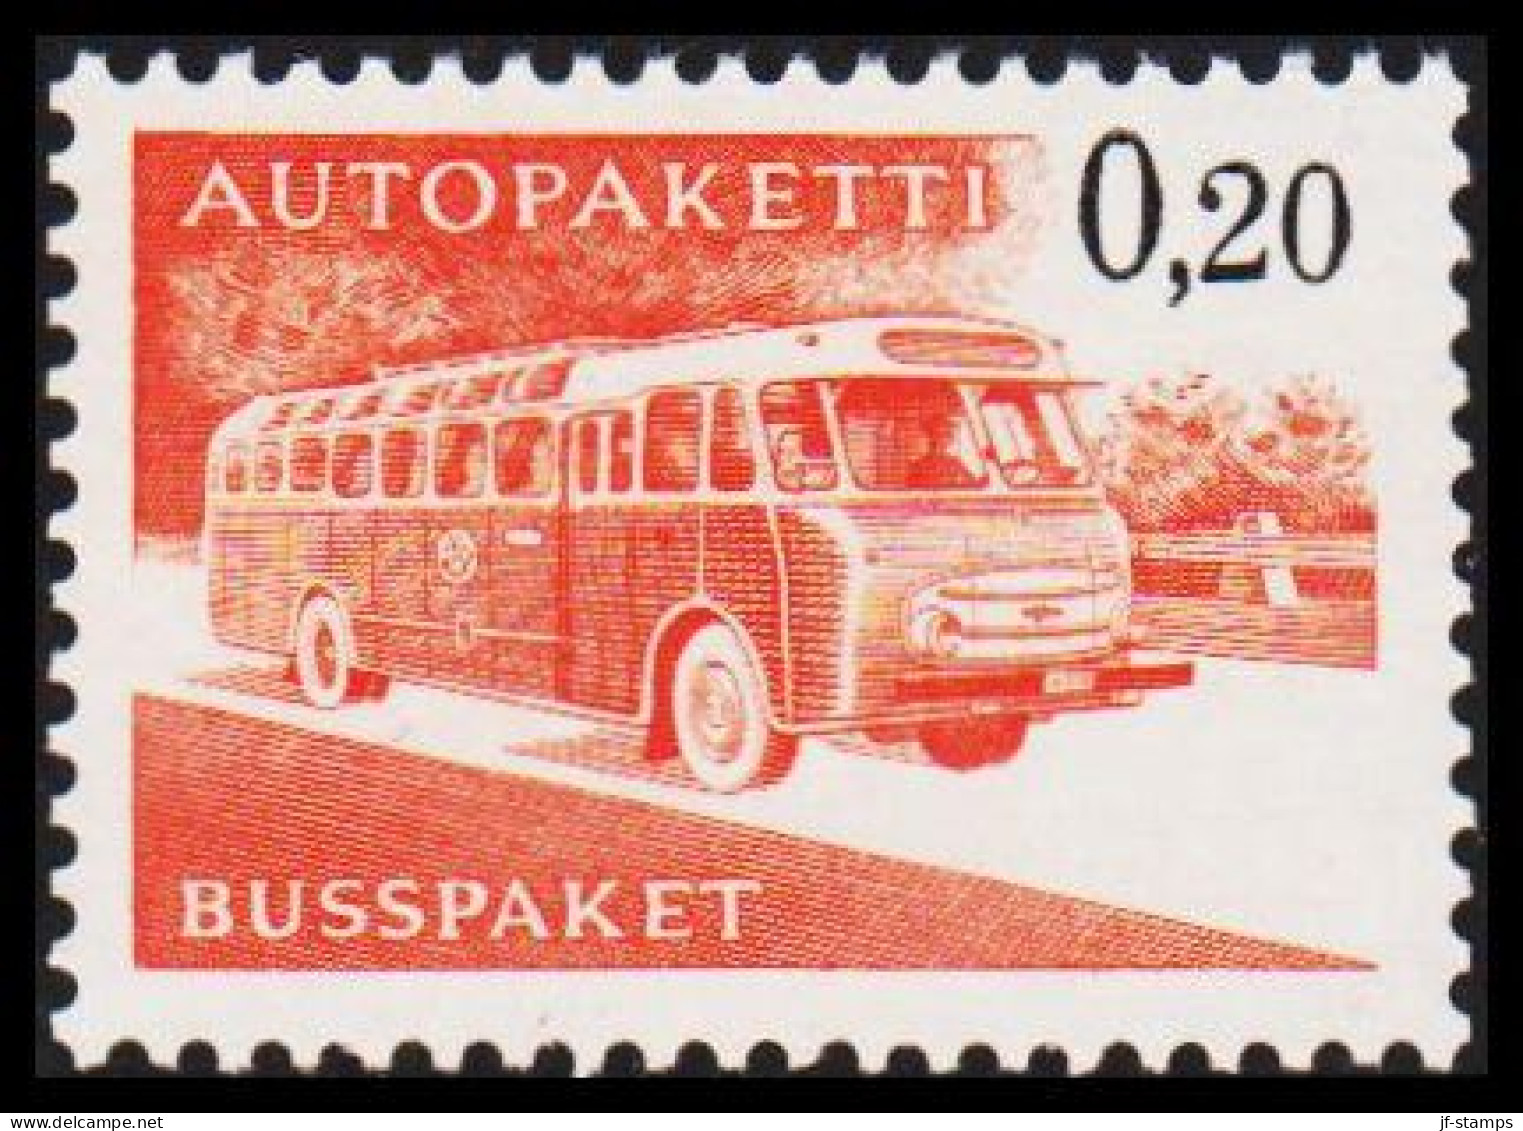 1963-1980. FINLAND. Mail Bus. 0,20 Mk. AUTOPAKETTI - BUSSPAKET Never Hinged. Lumogen. Whit... (Michel AP 11y) - JF535623 - Colis Par Autobus